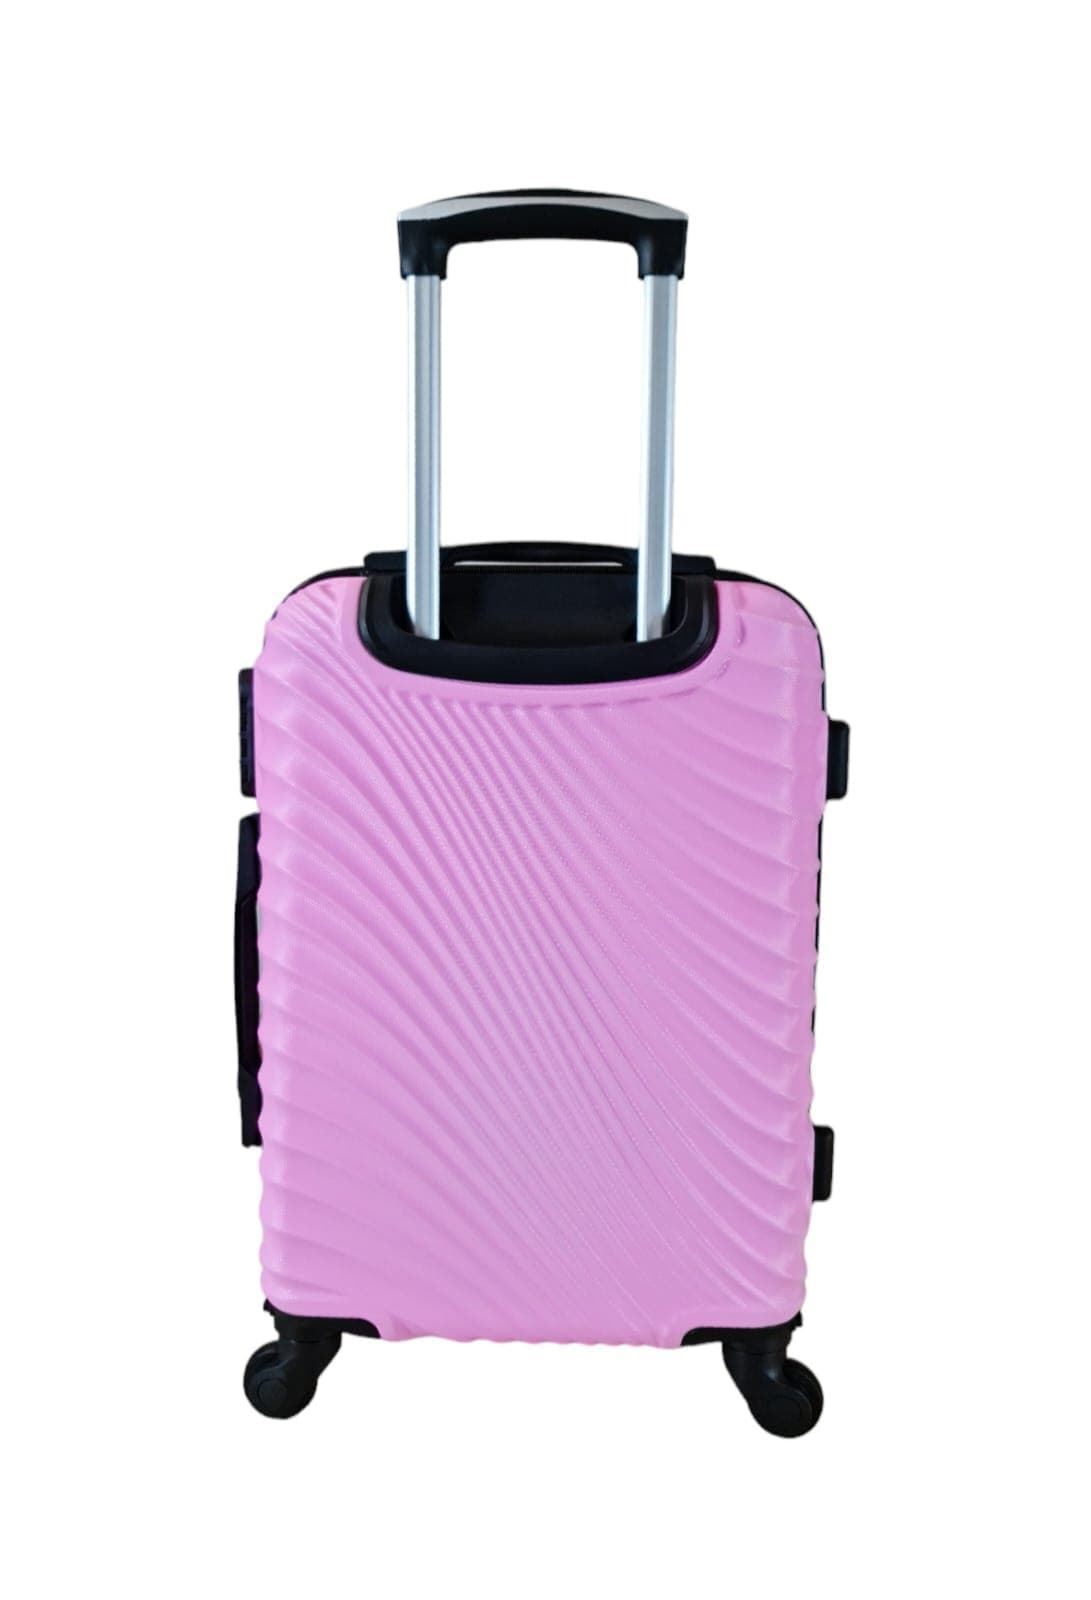 Maleta de Viaje Tamaño Cabina VIP Peso 10 kilos Material ABS Barata Medidas 55x40x20 color Rosa Barbie - Imagen 4